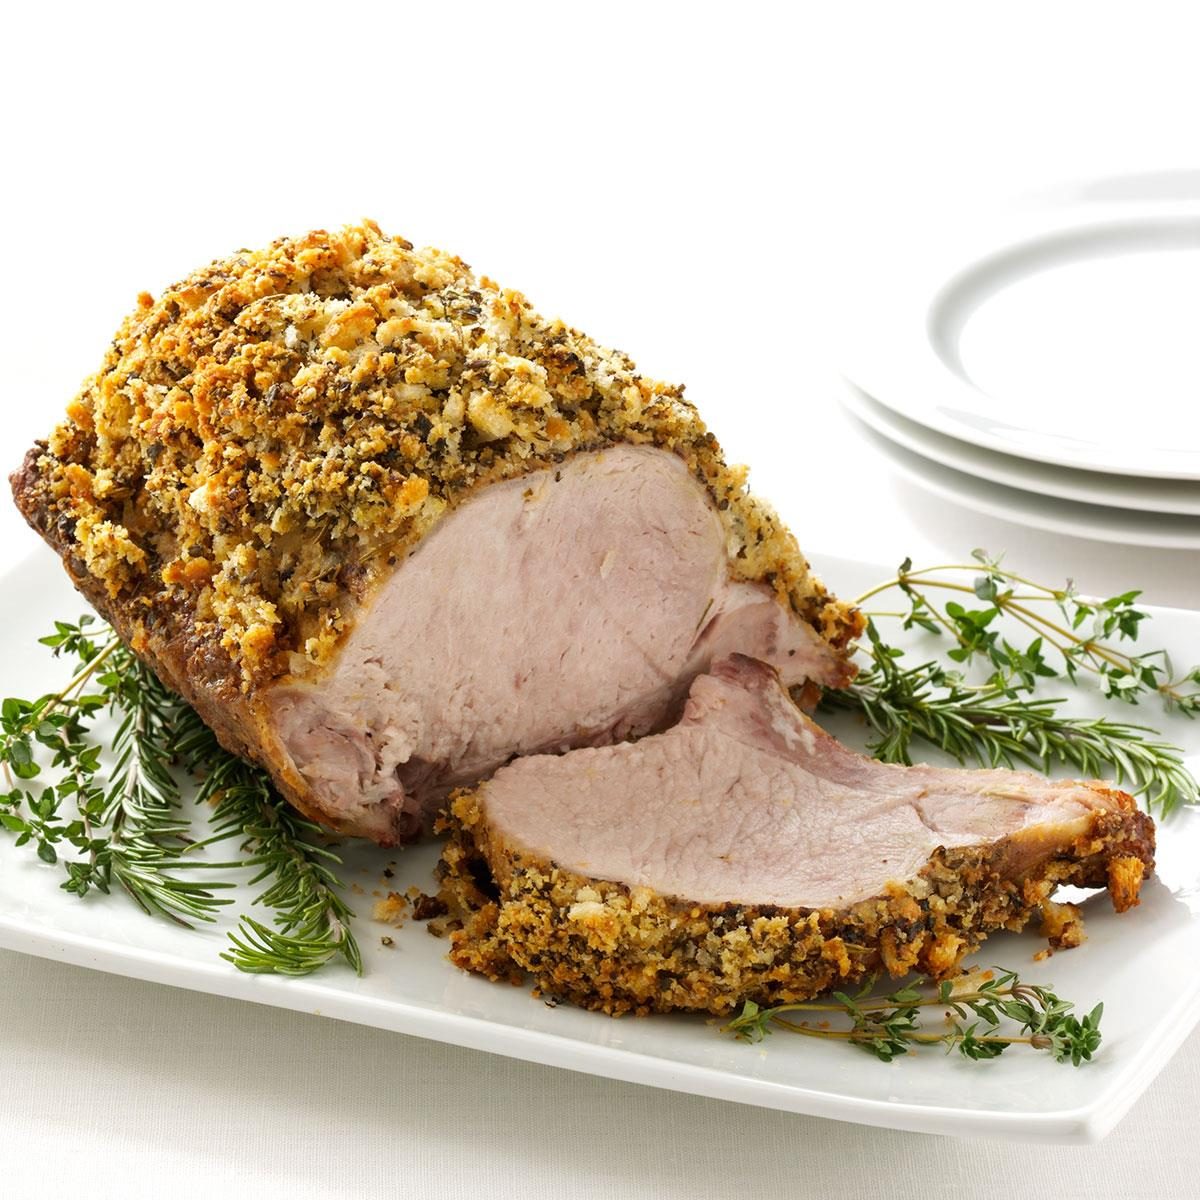 Herb-Crusted Pork Roast Recipe: How to Make It